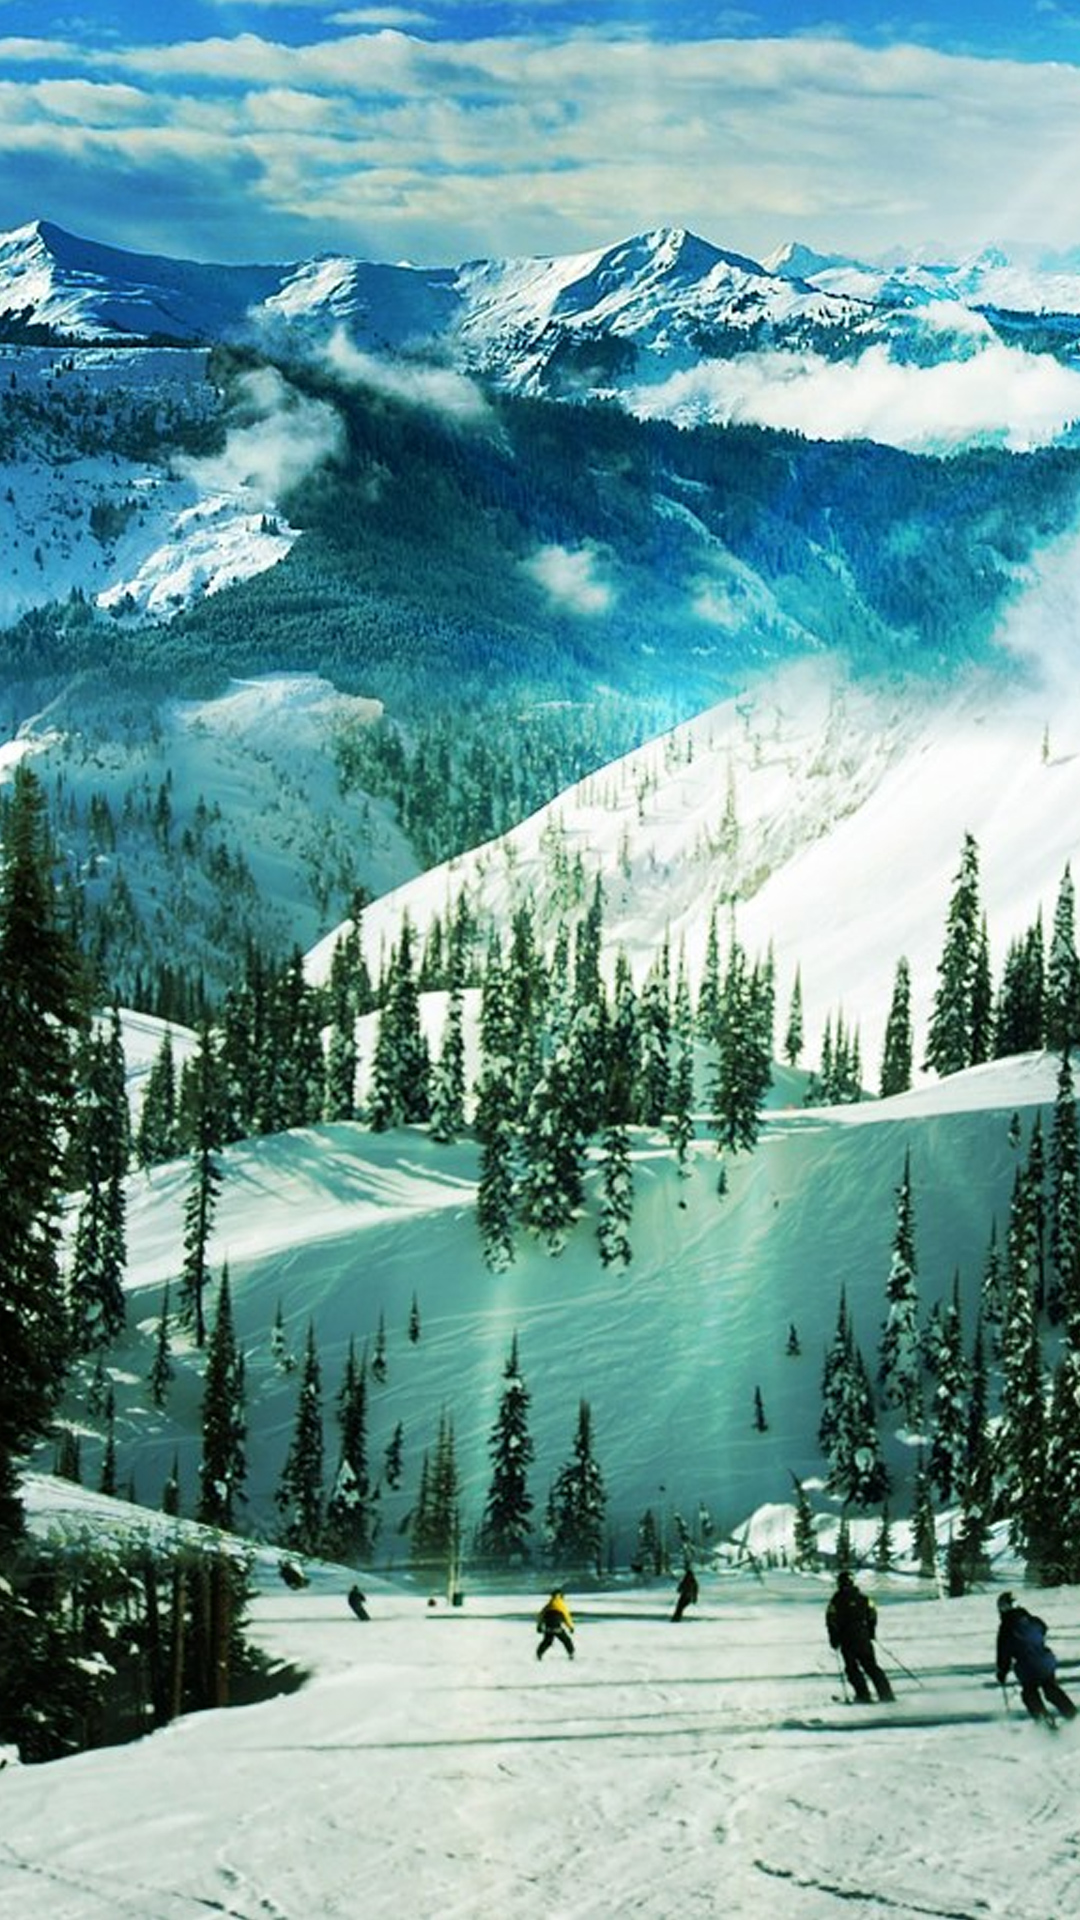 Ski Slope Paradise Winter Landscape iPhone 6 Plus HD Wallpaper